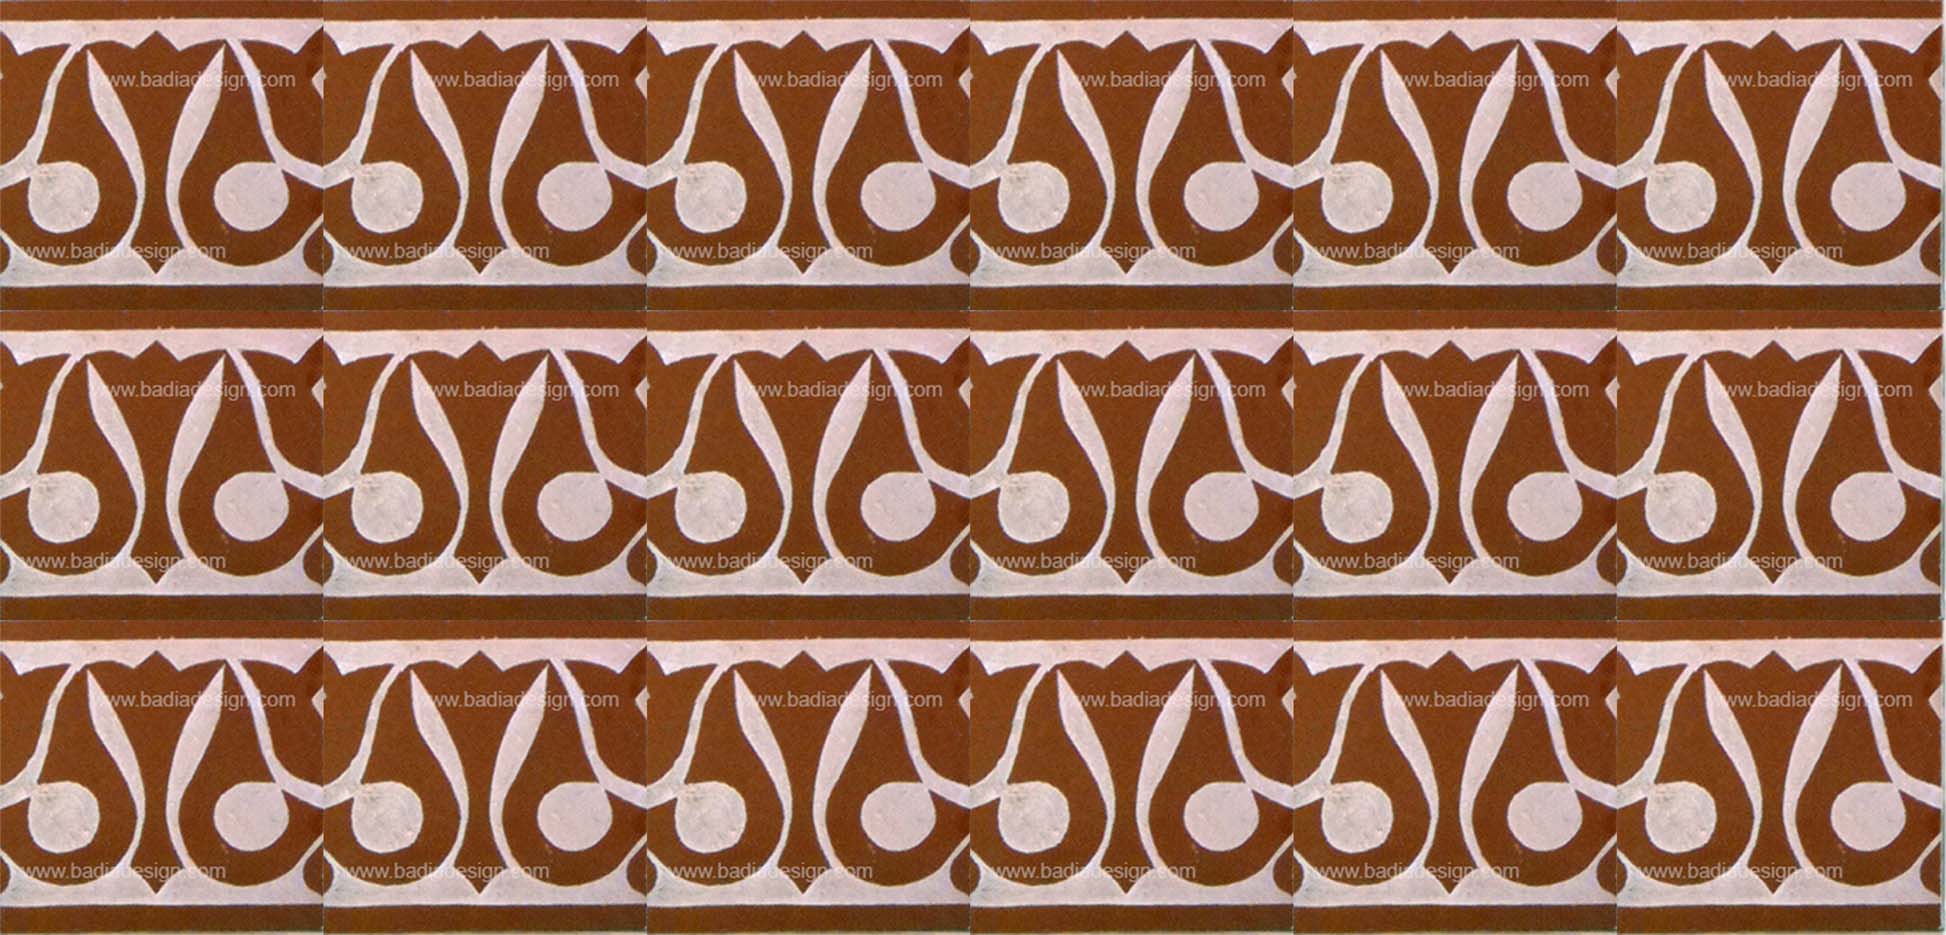 Moroccan Tile Installation